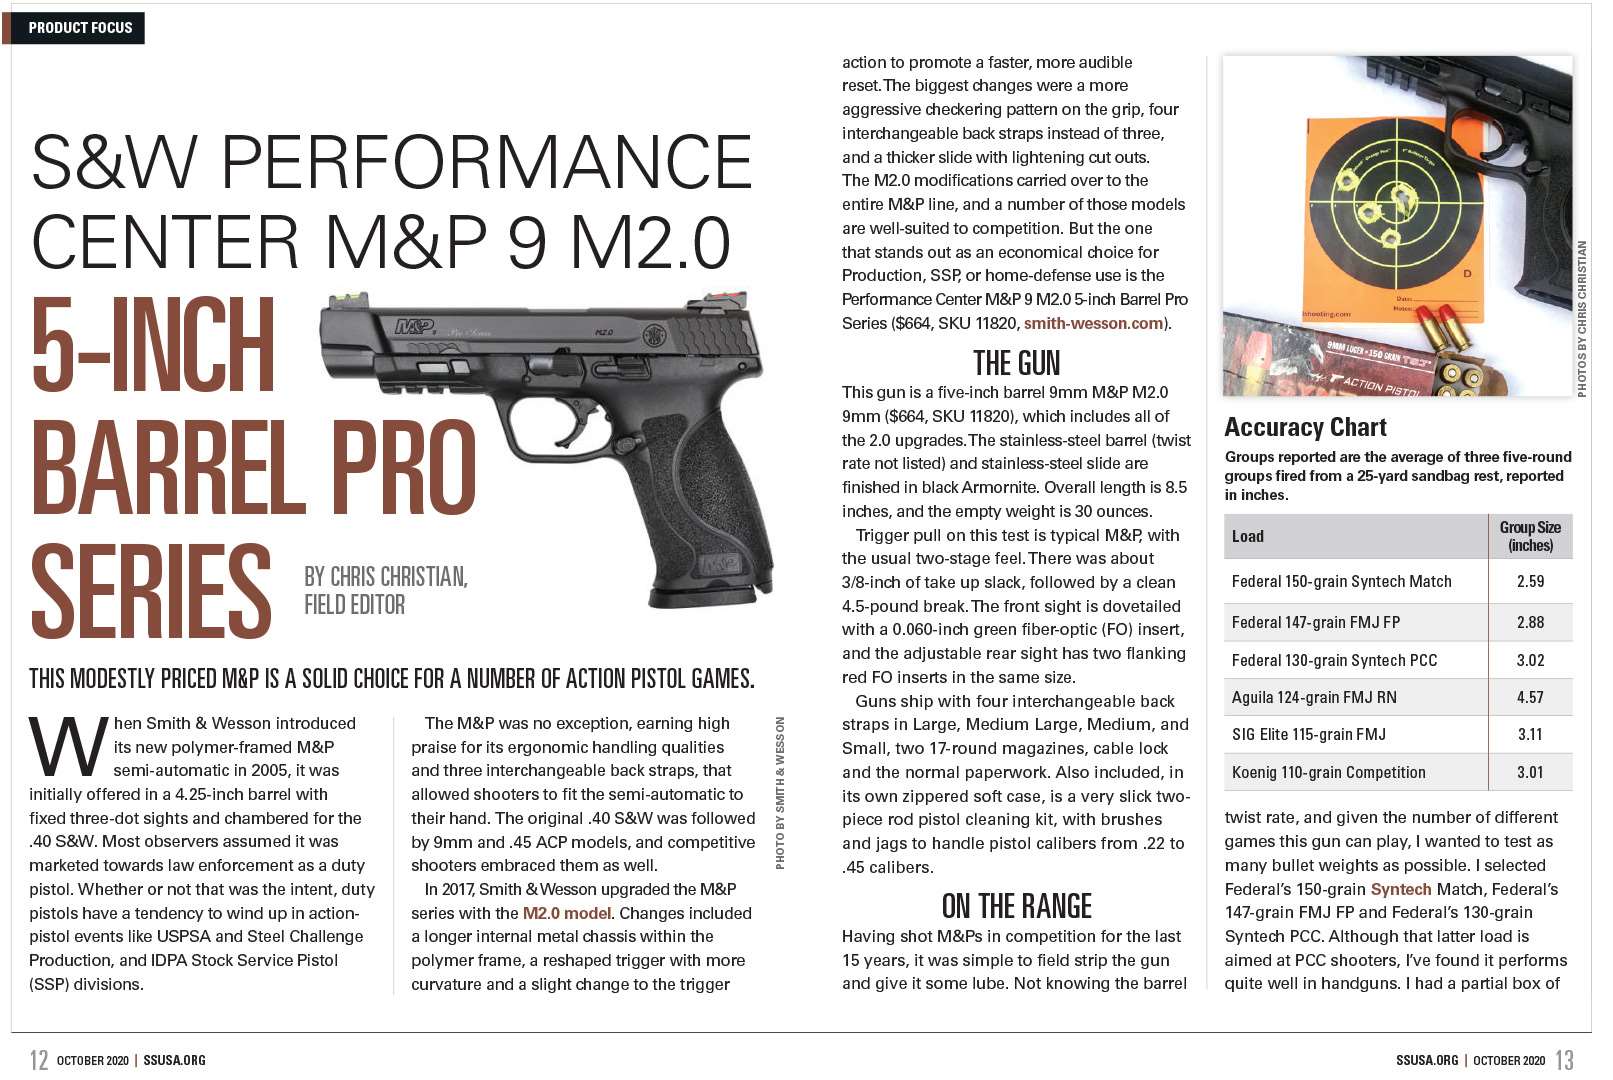 M&amp;P 9 M 2.0 5-inch Barrel Pro Series